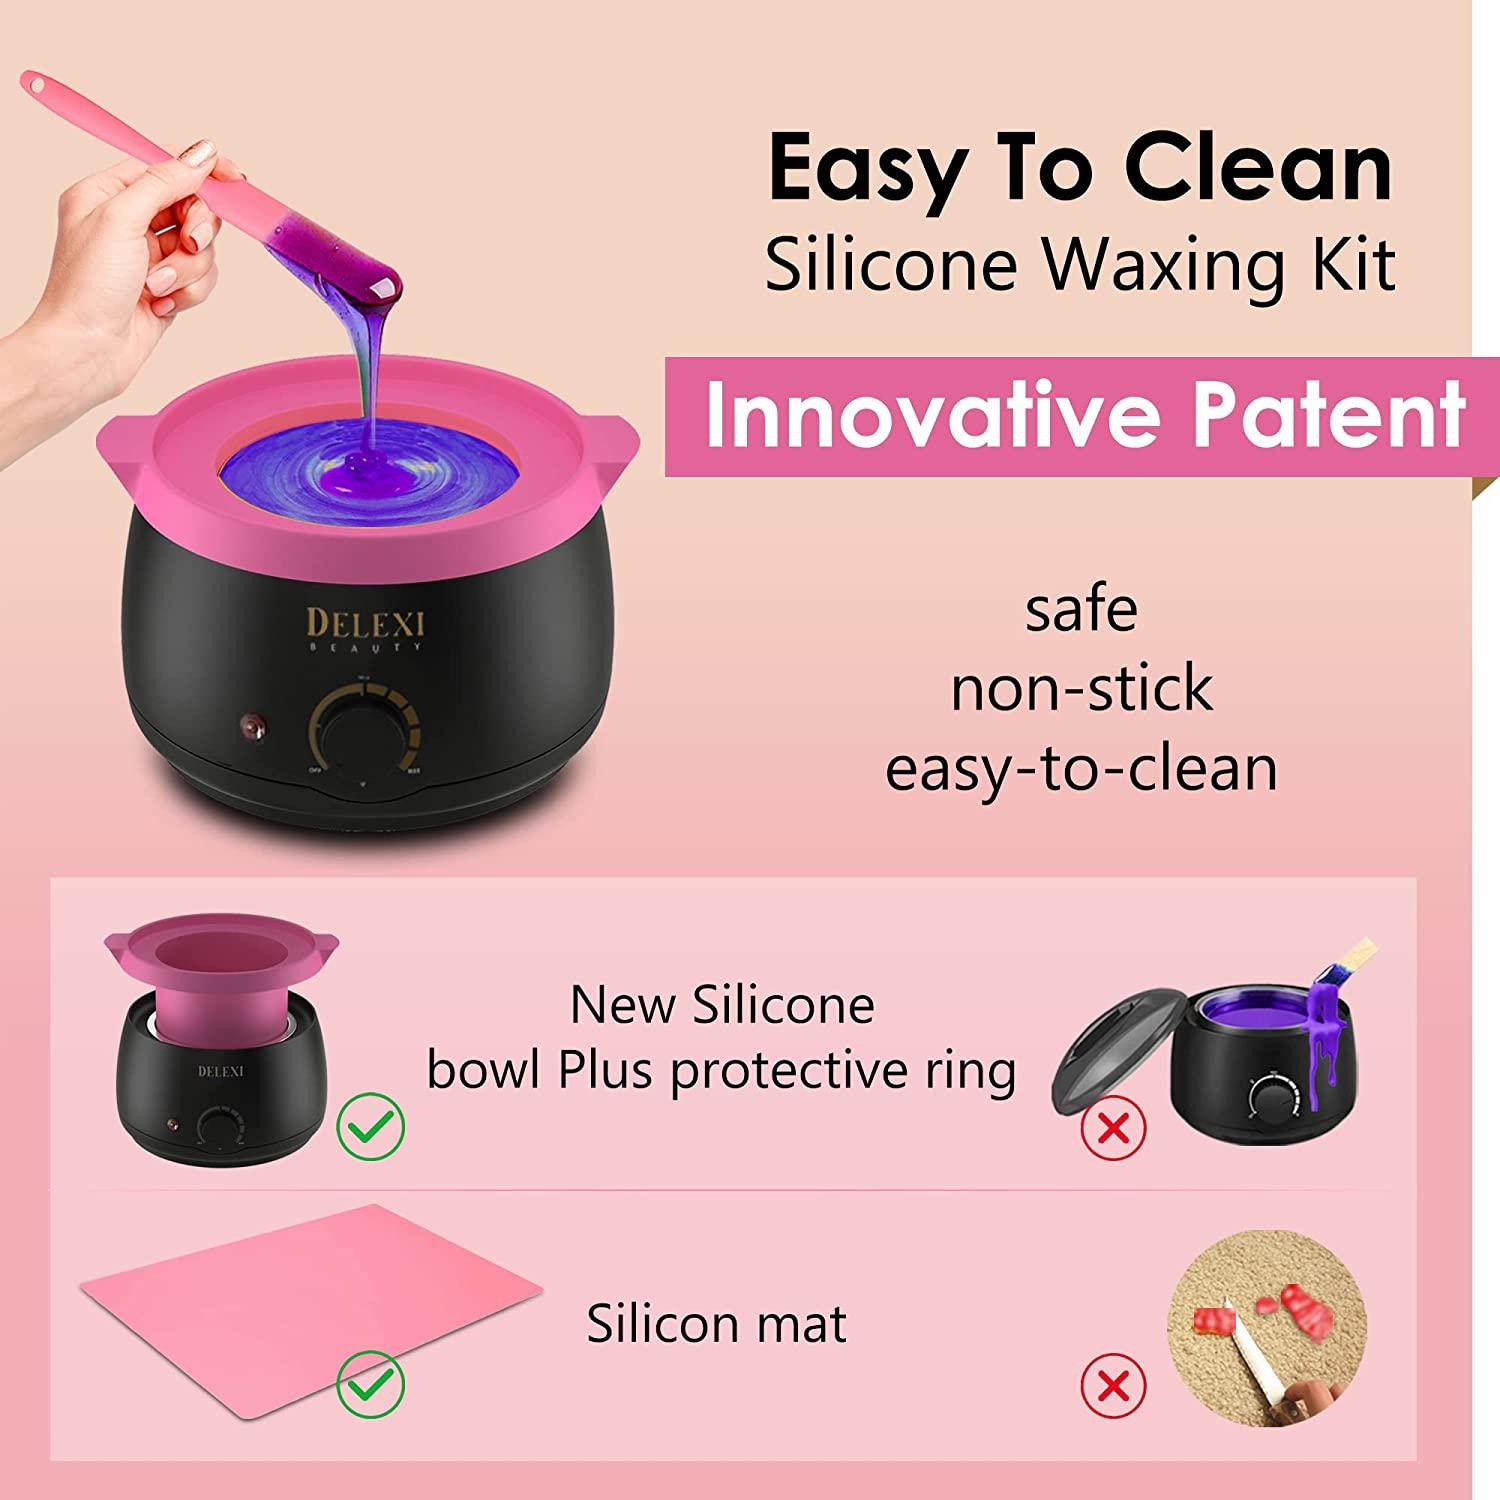 Do you use wax cleaner before hot waxing? : r/xcountryskiing